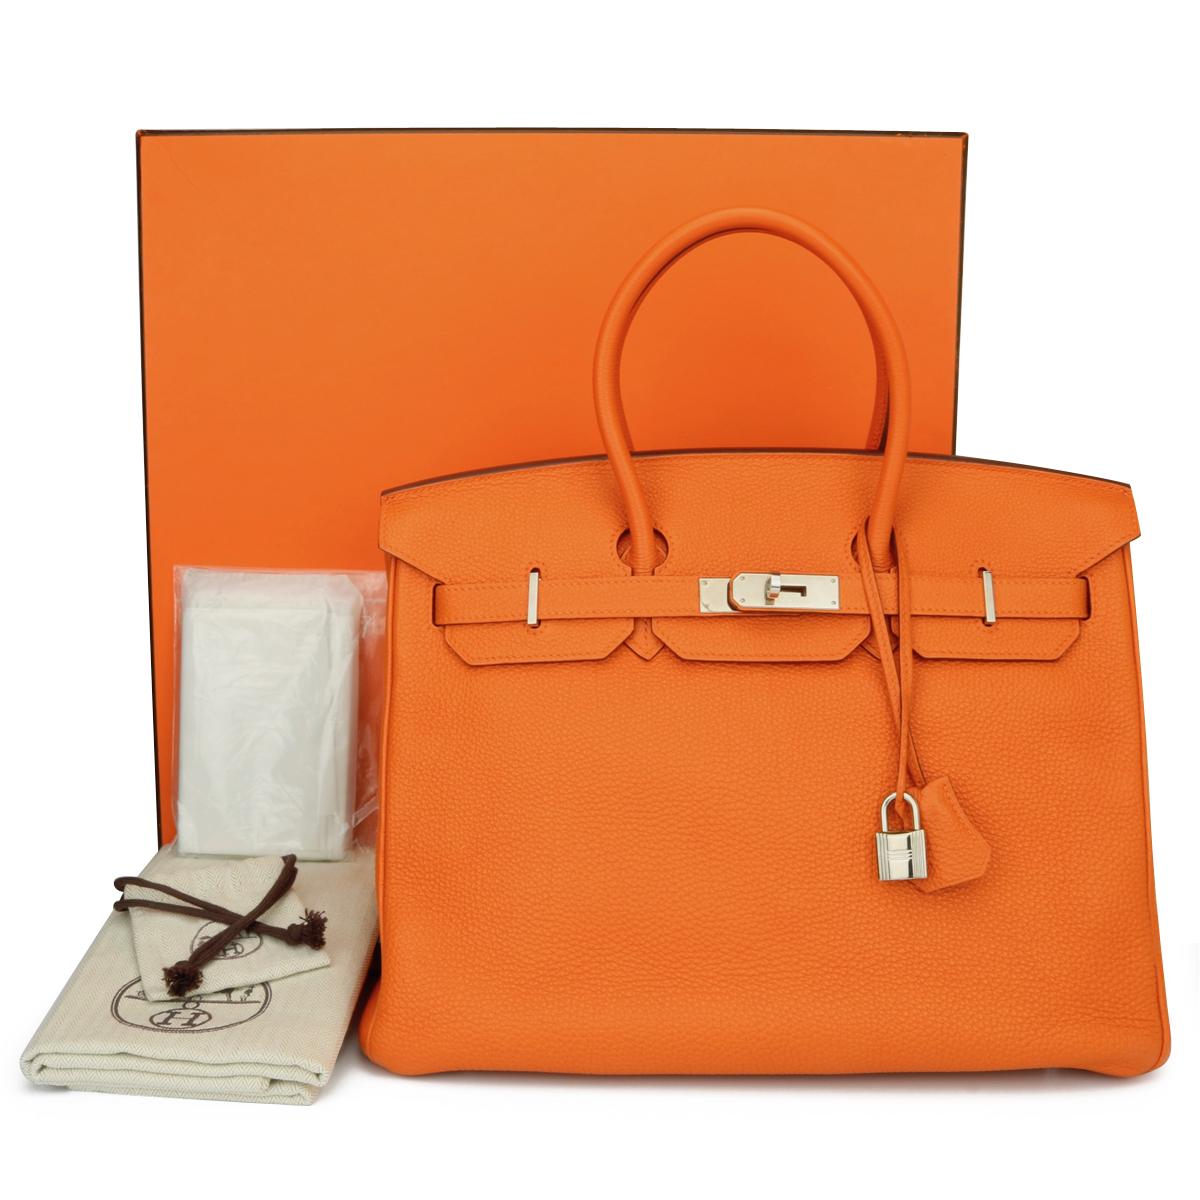 Hermès Birkin 35cm Bag Orange Togo Leather Palladium Hardware Stamp N Year 2010 14